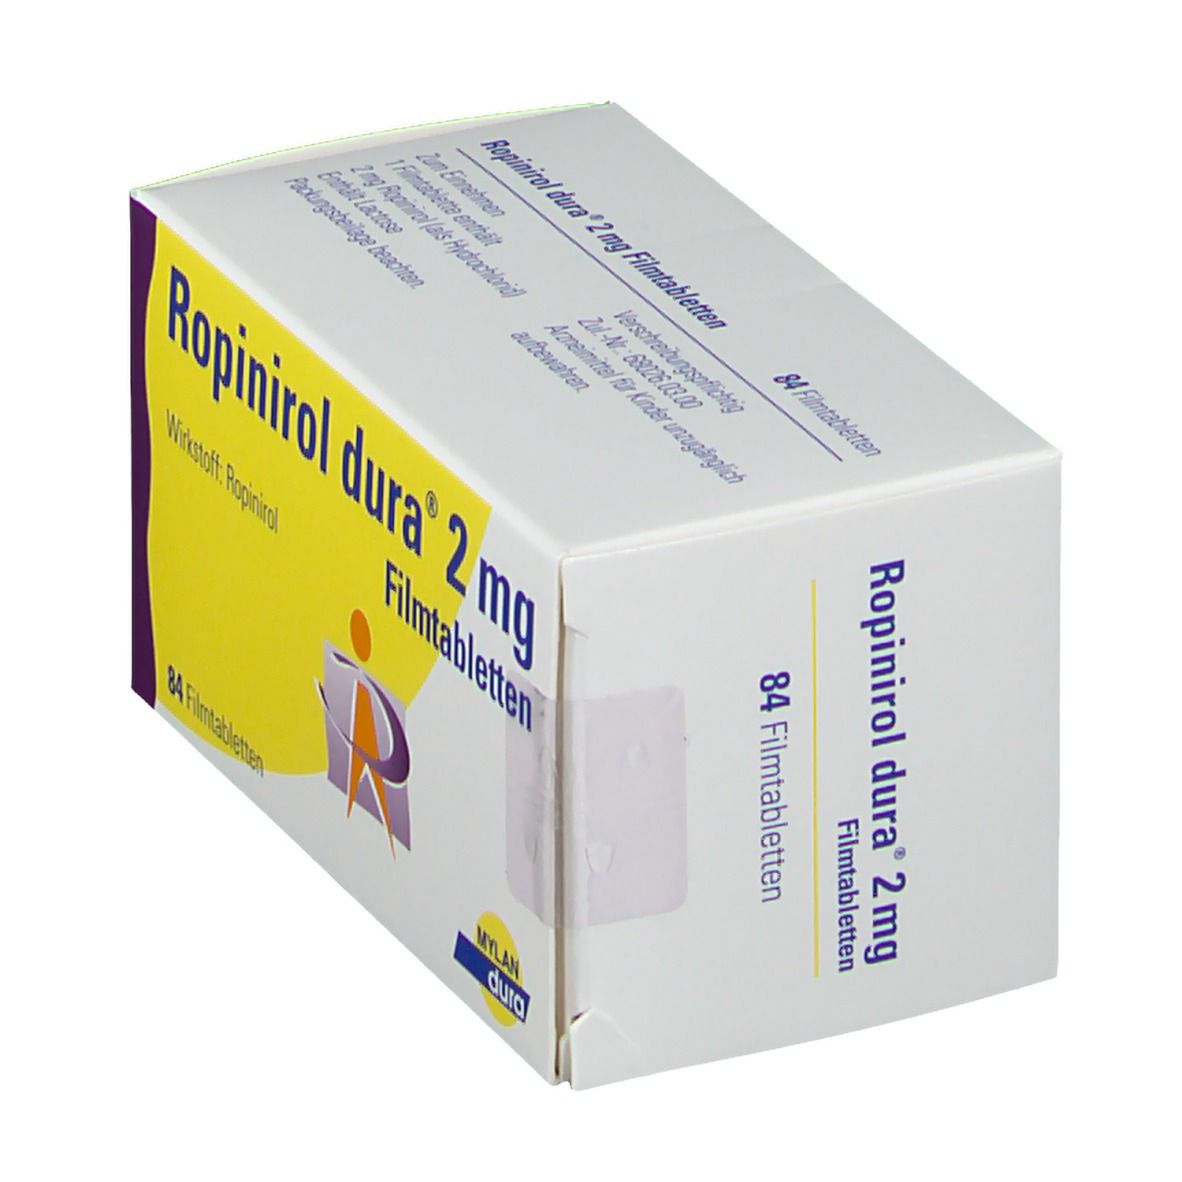 Ropinirol dura® 2 mg